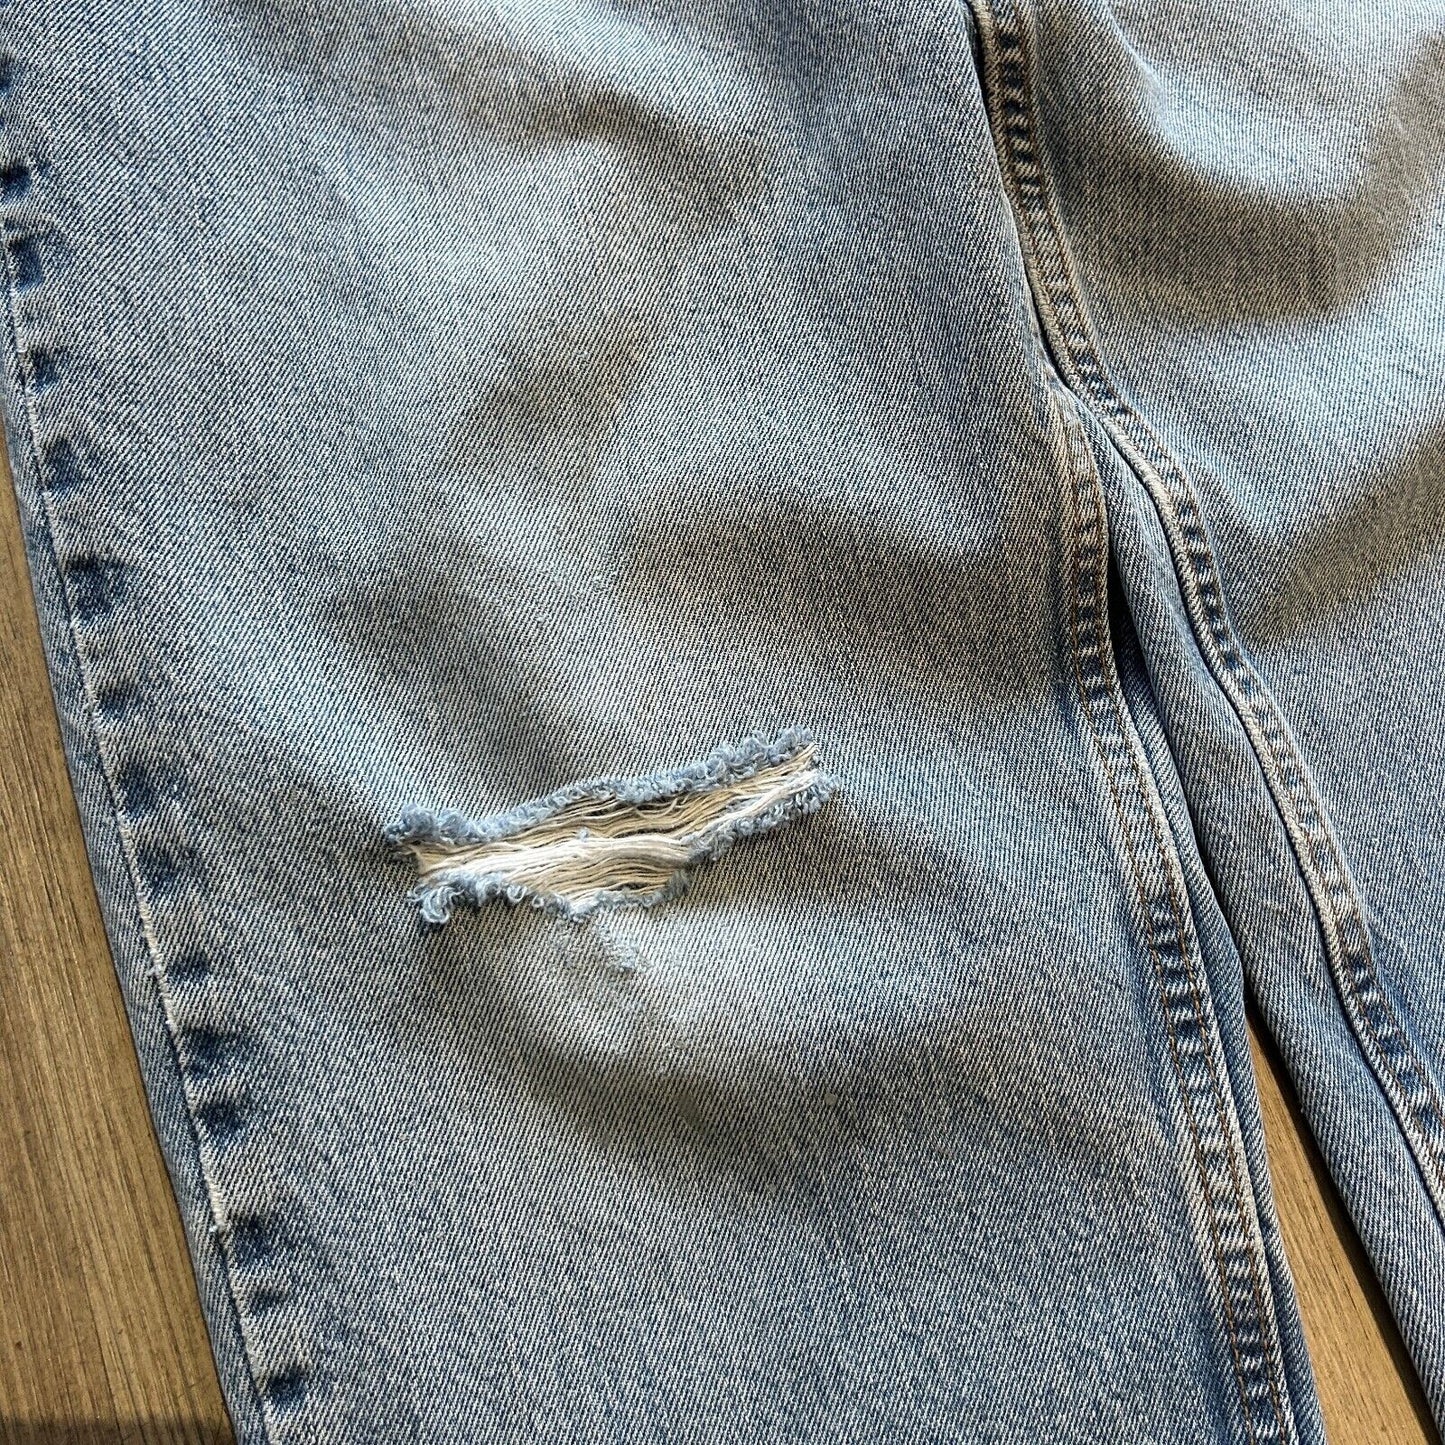 VINTAGE 90s | LEVIS Red Tab Light Wash Loose Fit w Tapper Jeans Pants sz W33 L32